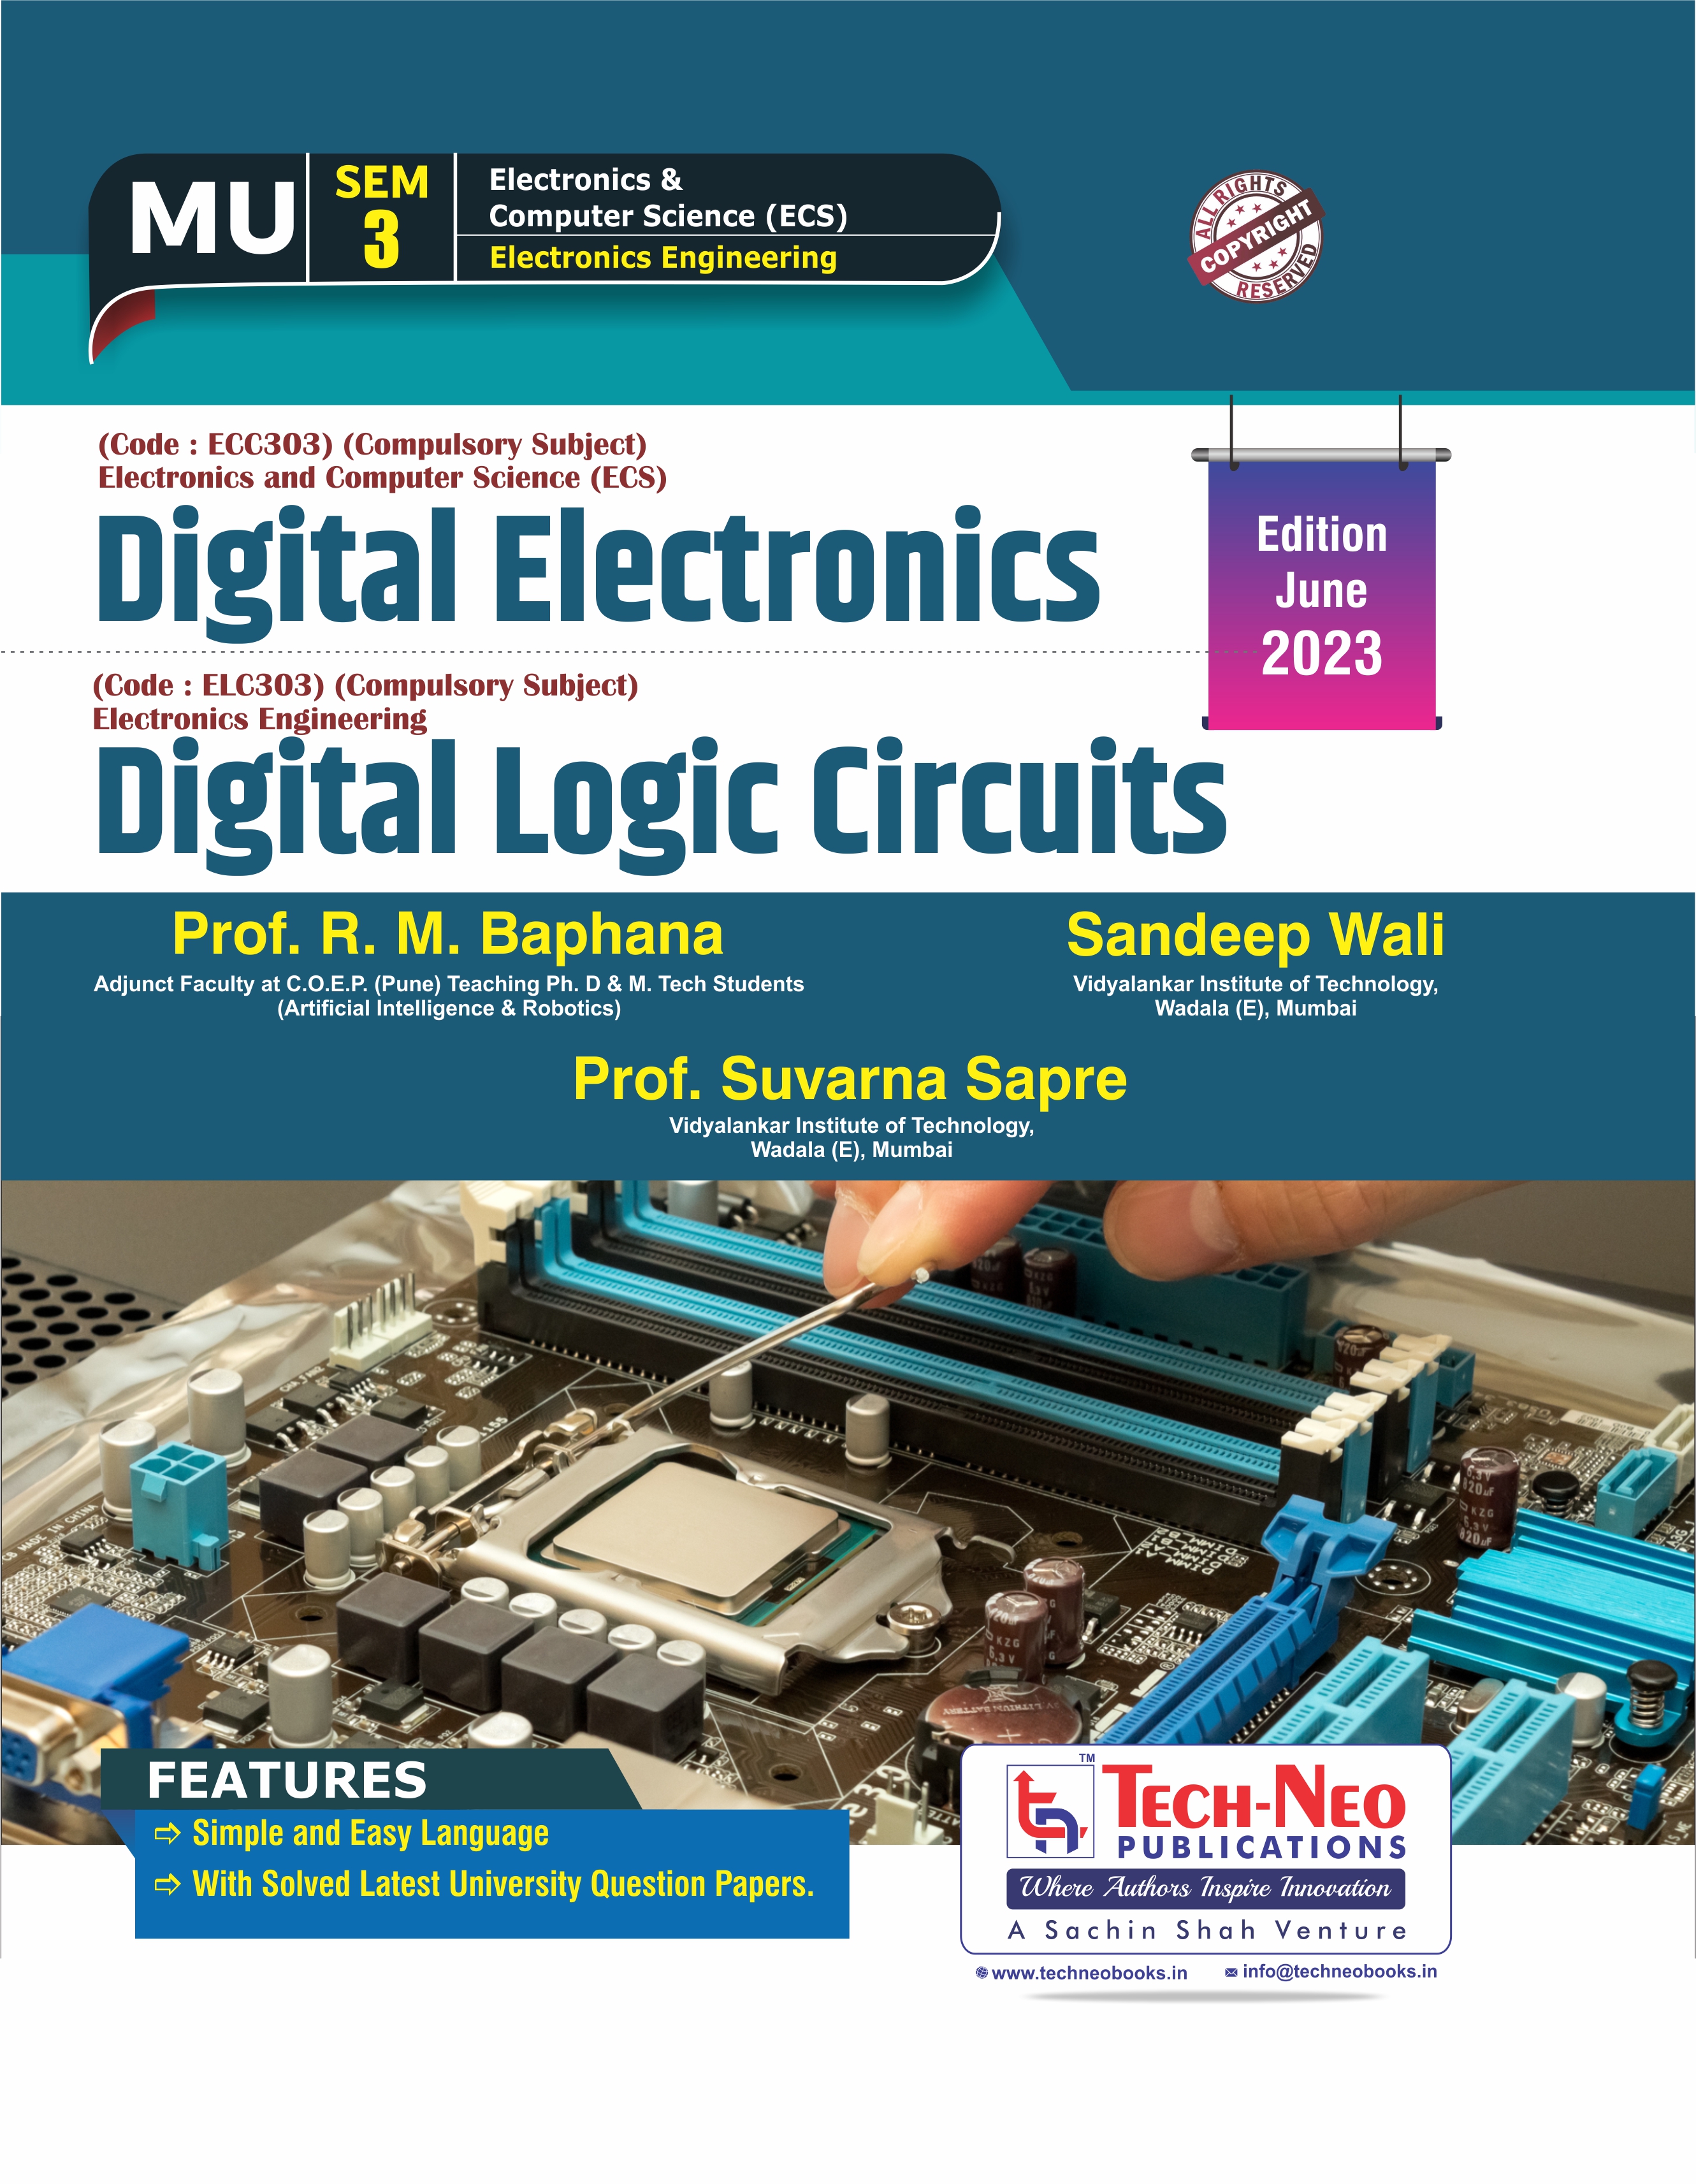 Digital Logic Circuits (ELC303)